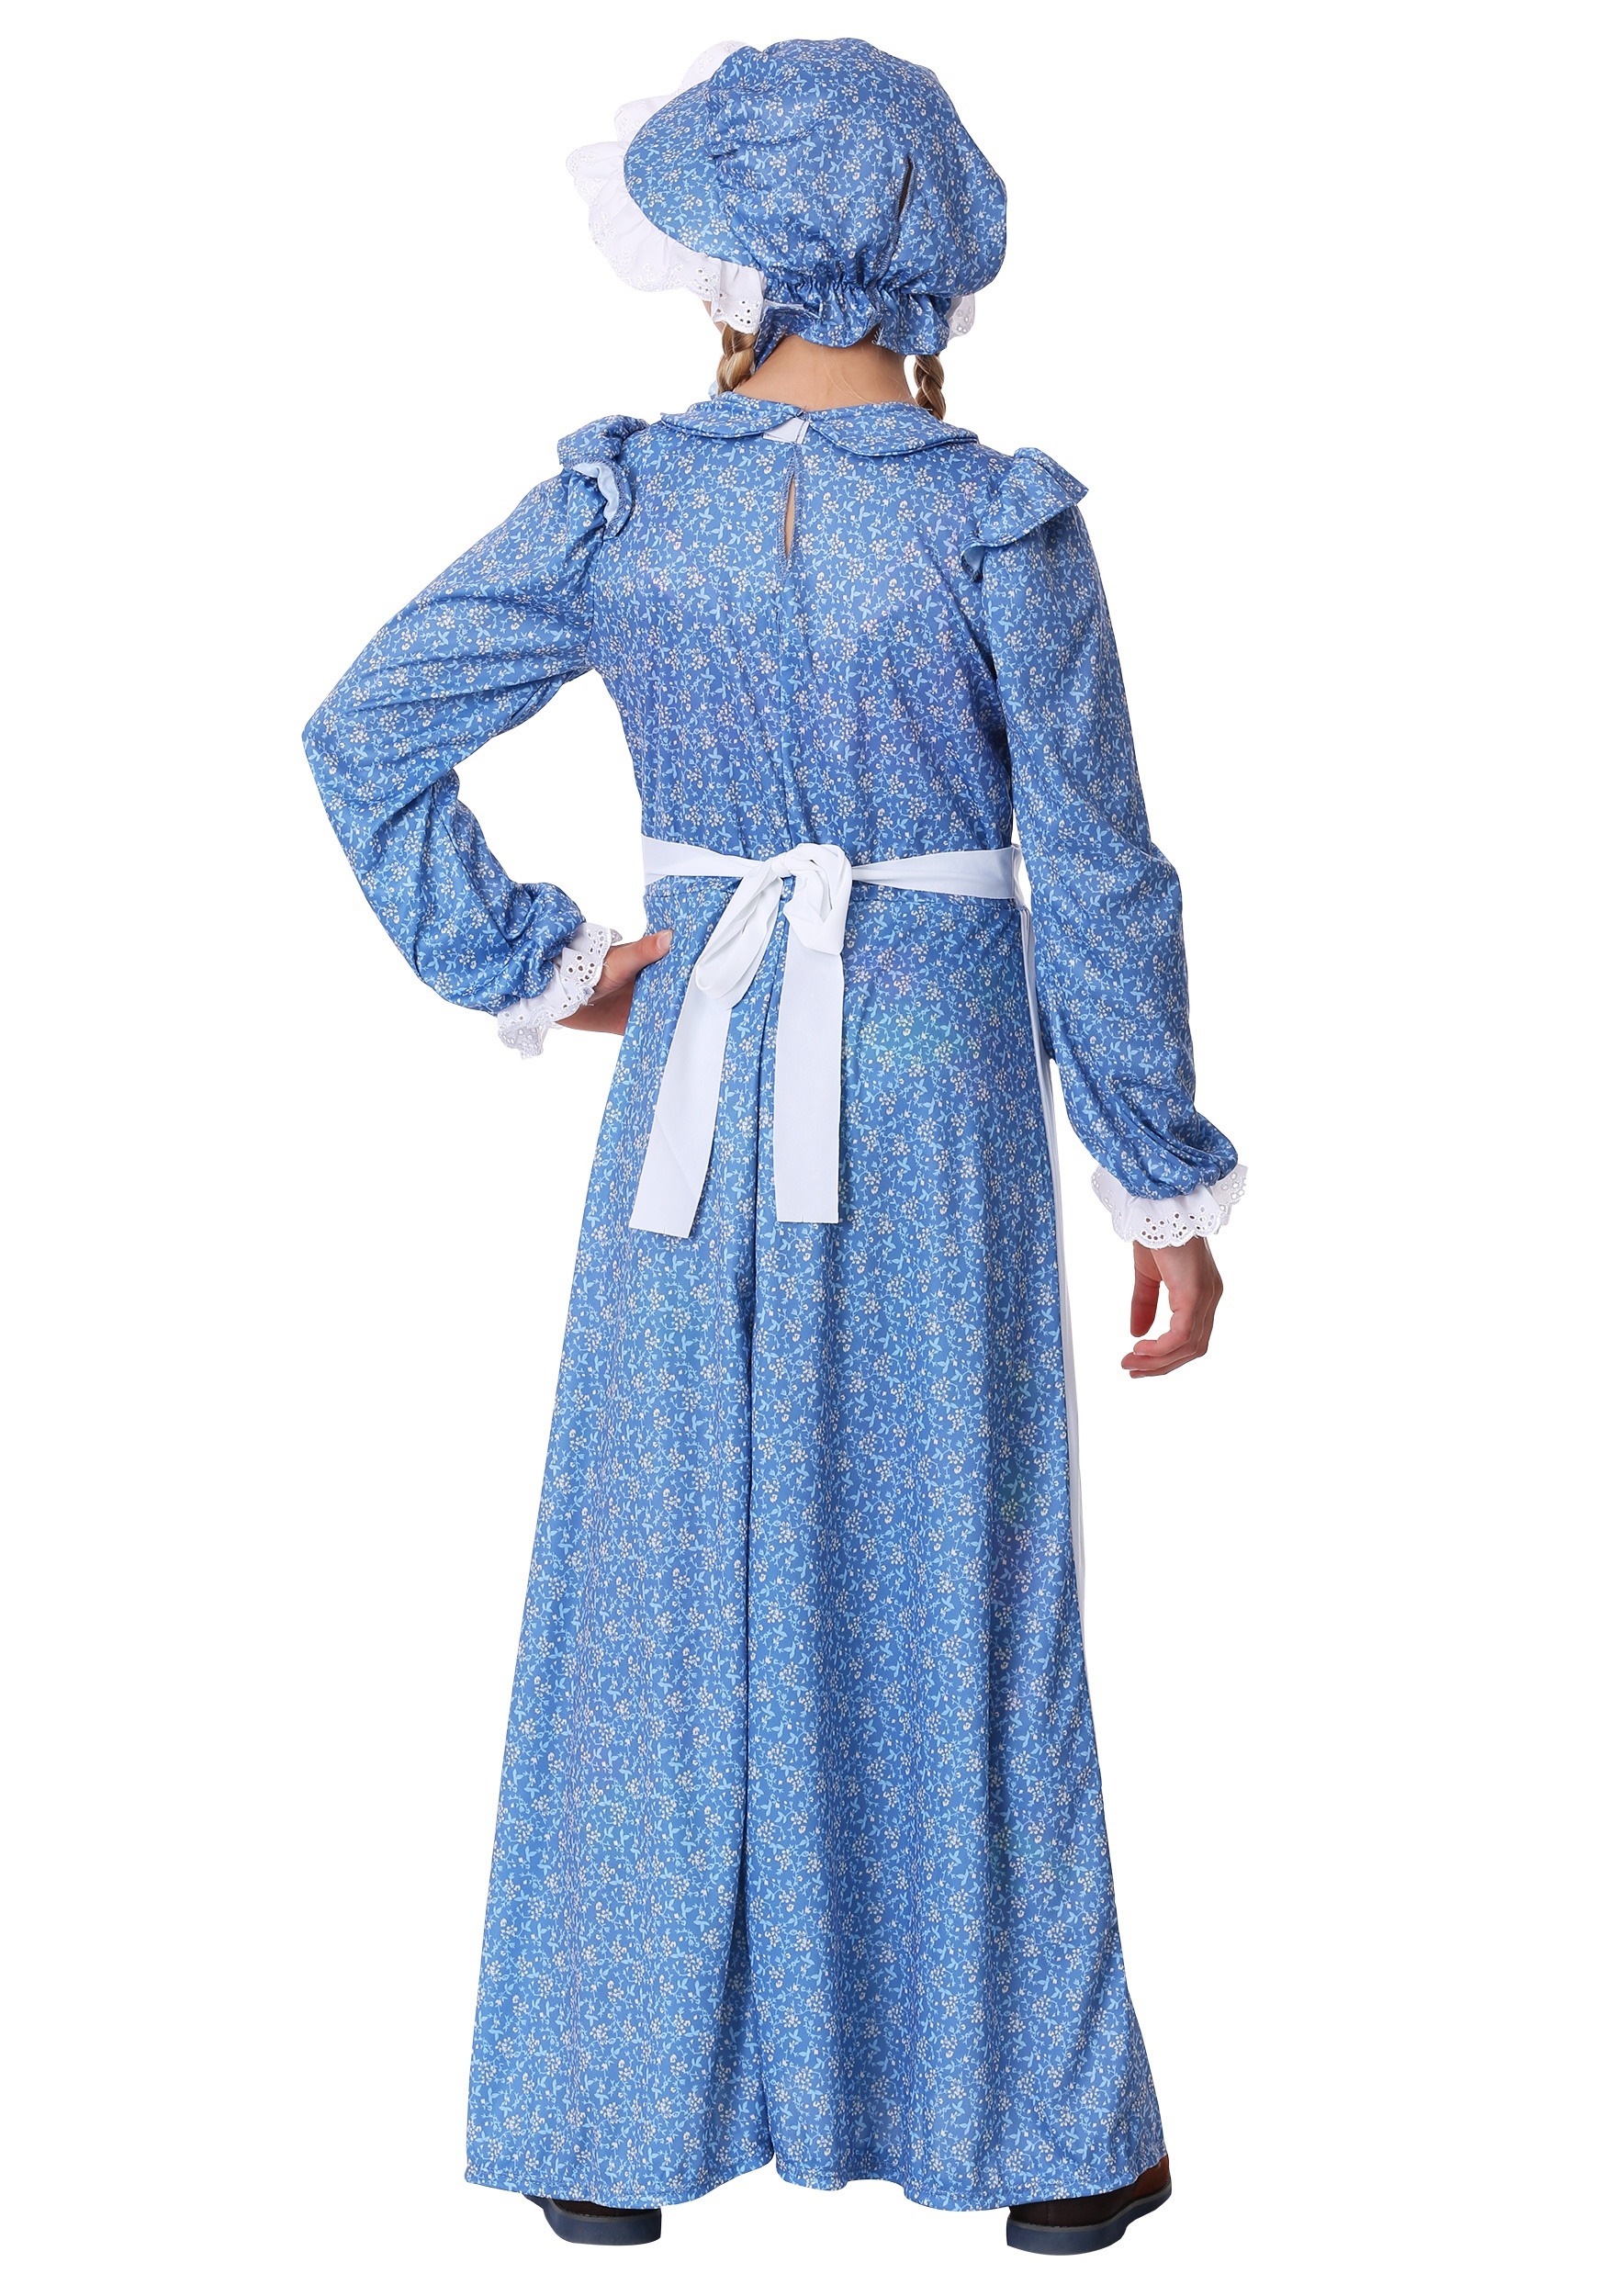 Pioneer Girl Costume For Kids , Historical Costume